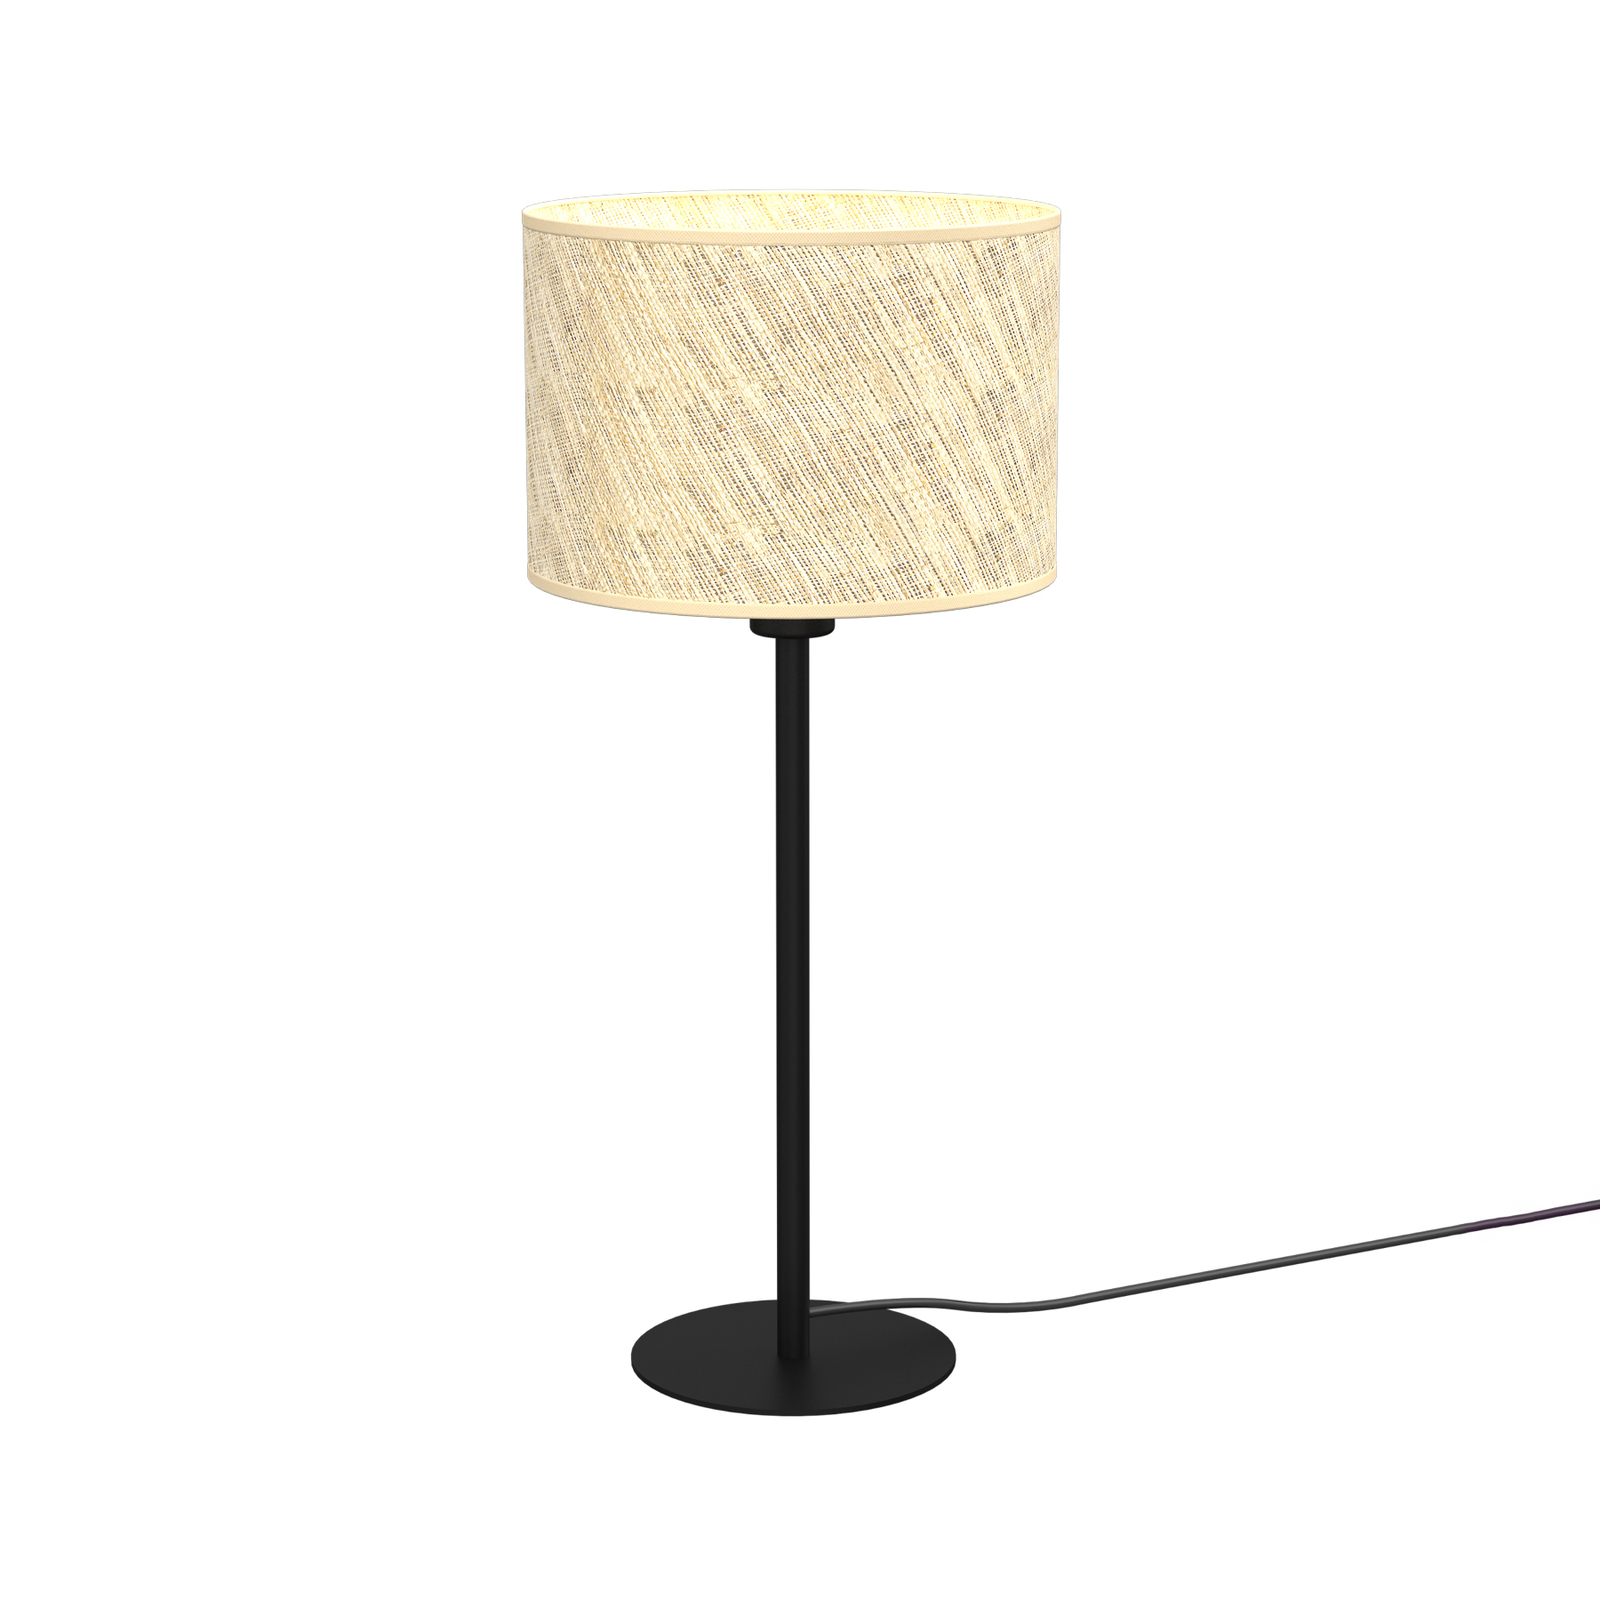 Jovin table lamp, rattan lampshade, height 56cm